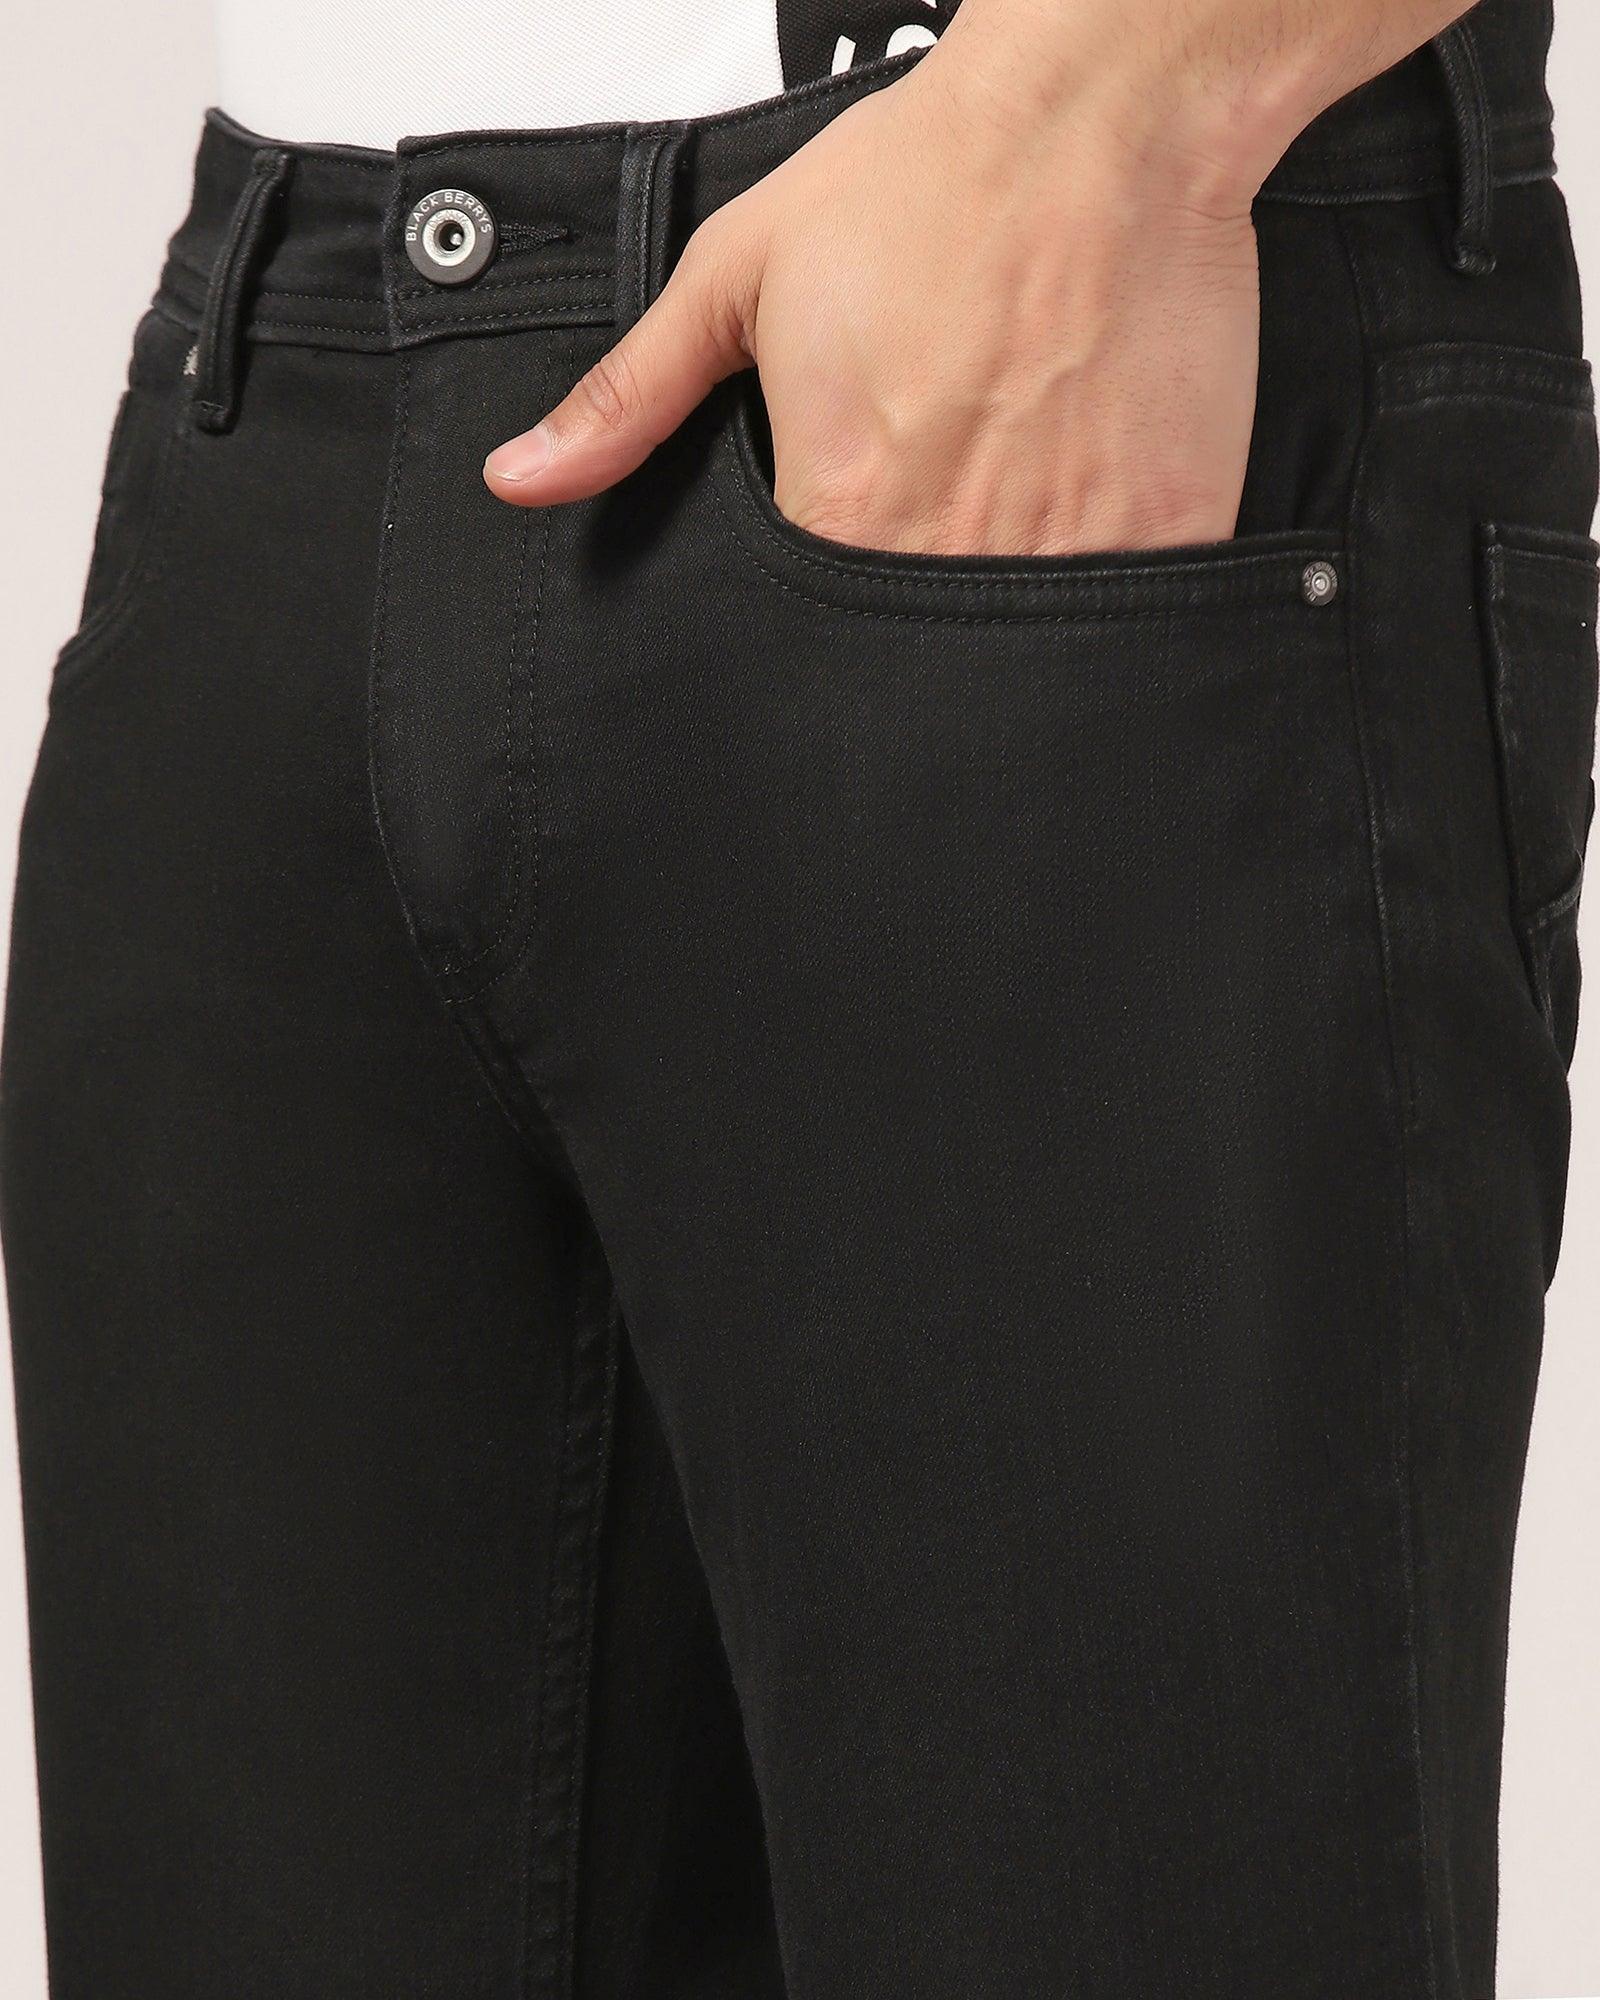 Straight Comfort Duke Fit Black Textured Jeans - Ruben